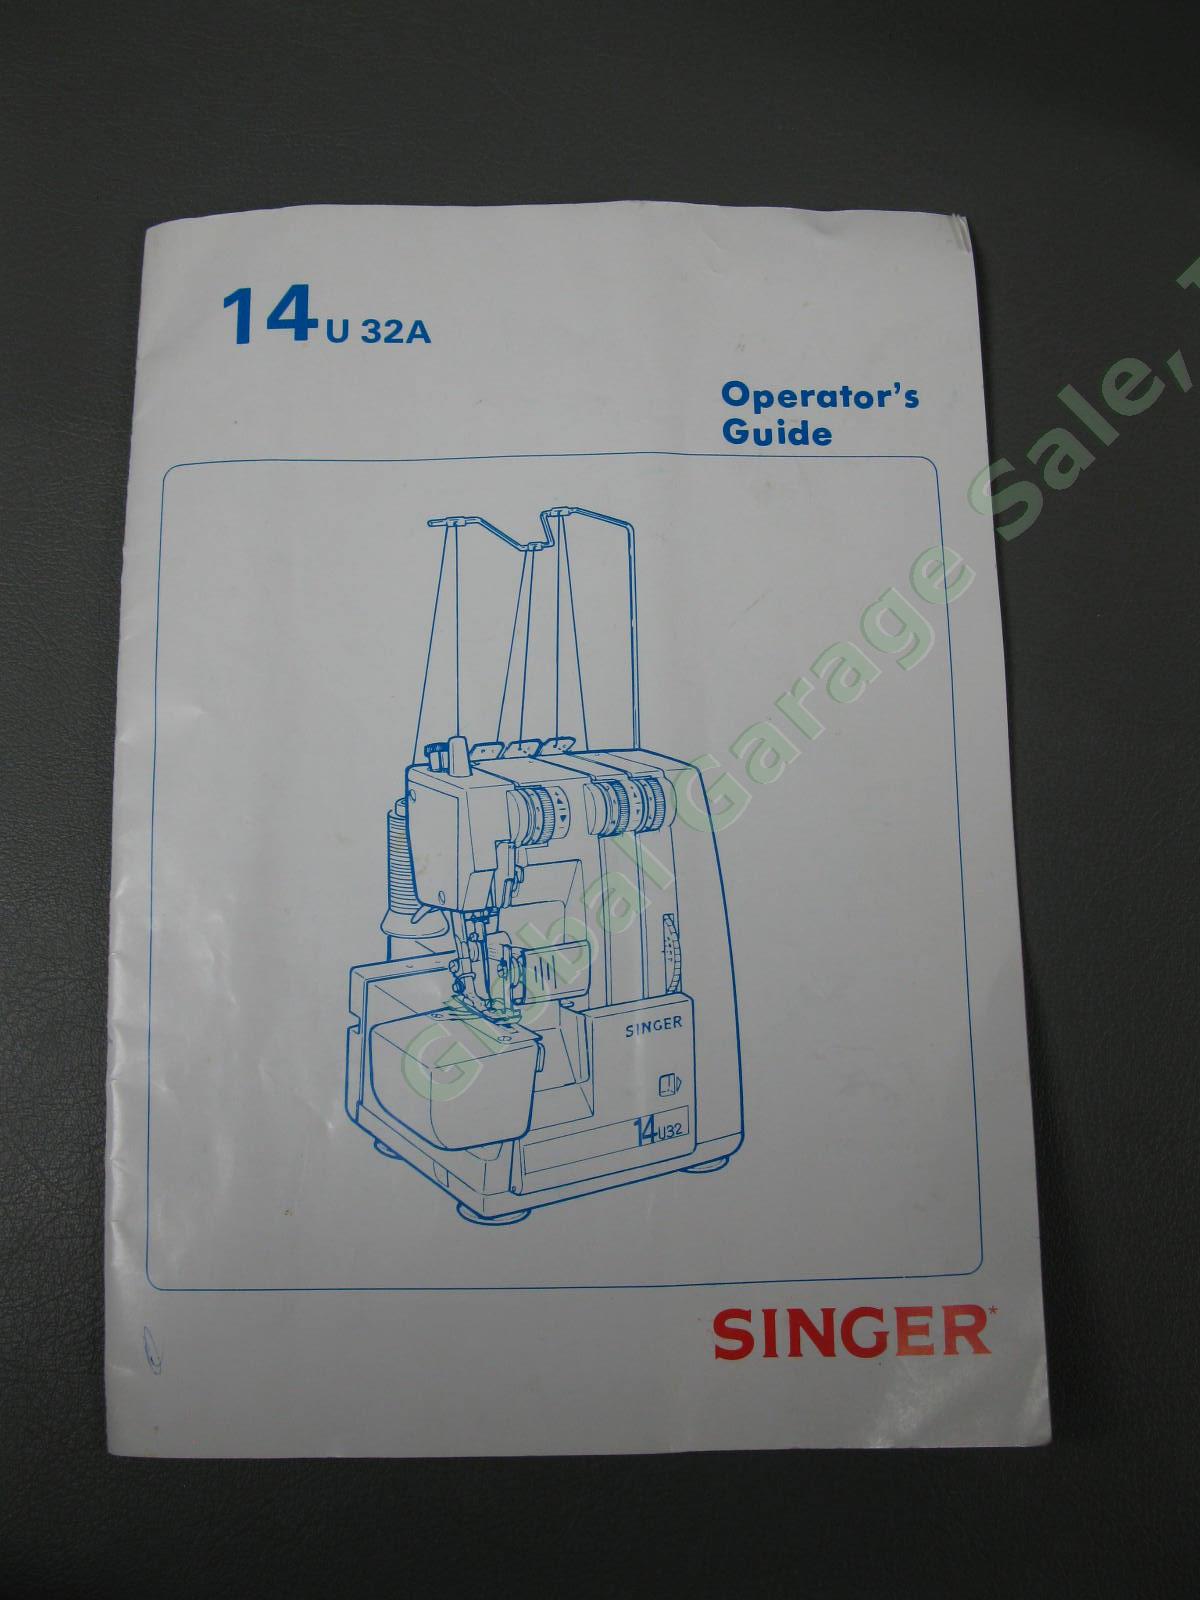 Singer Ultralock 14U32A Serger Sewing Machine Tested Runs Great Pedal Power Cord 7